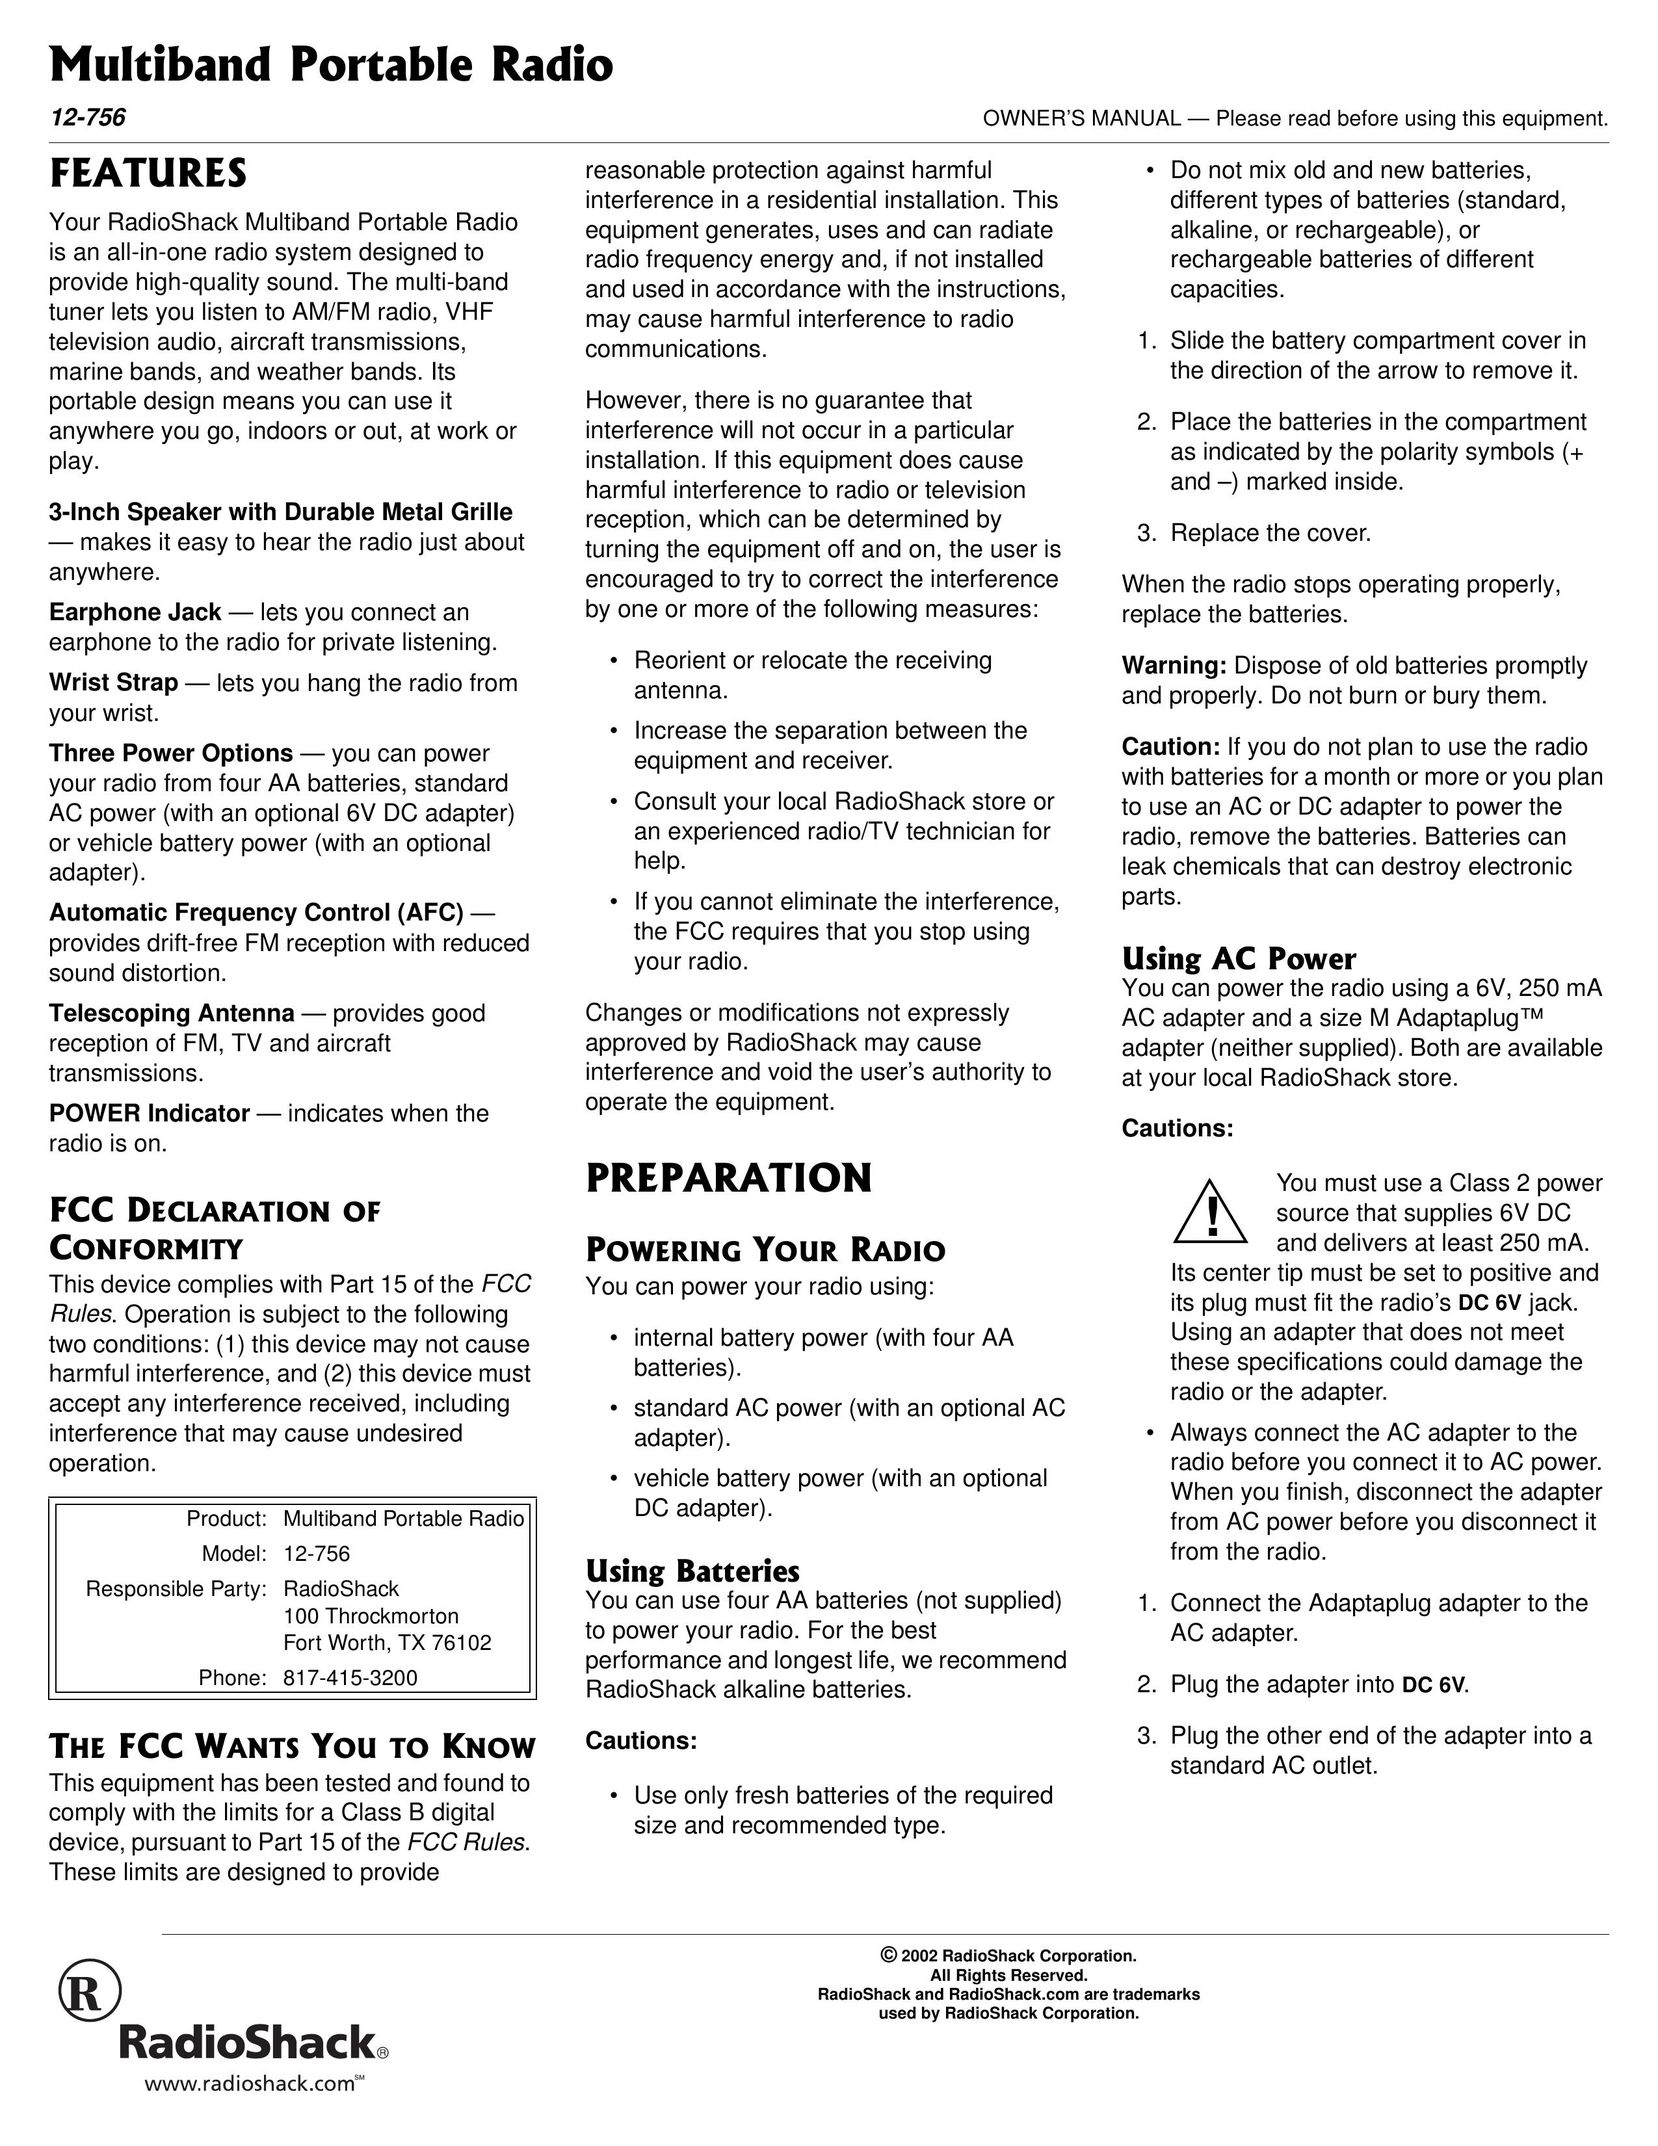 Radio Shack 12-756 Portable Radio User Manual